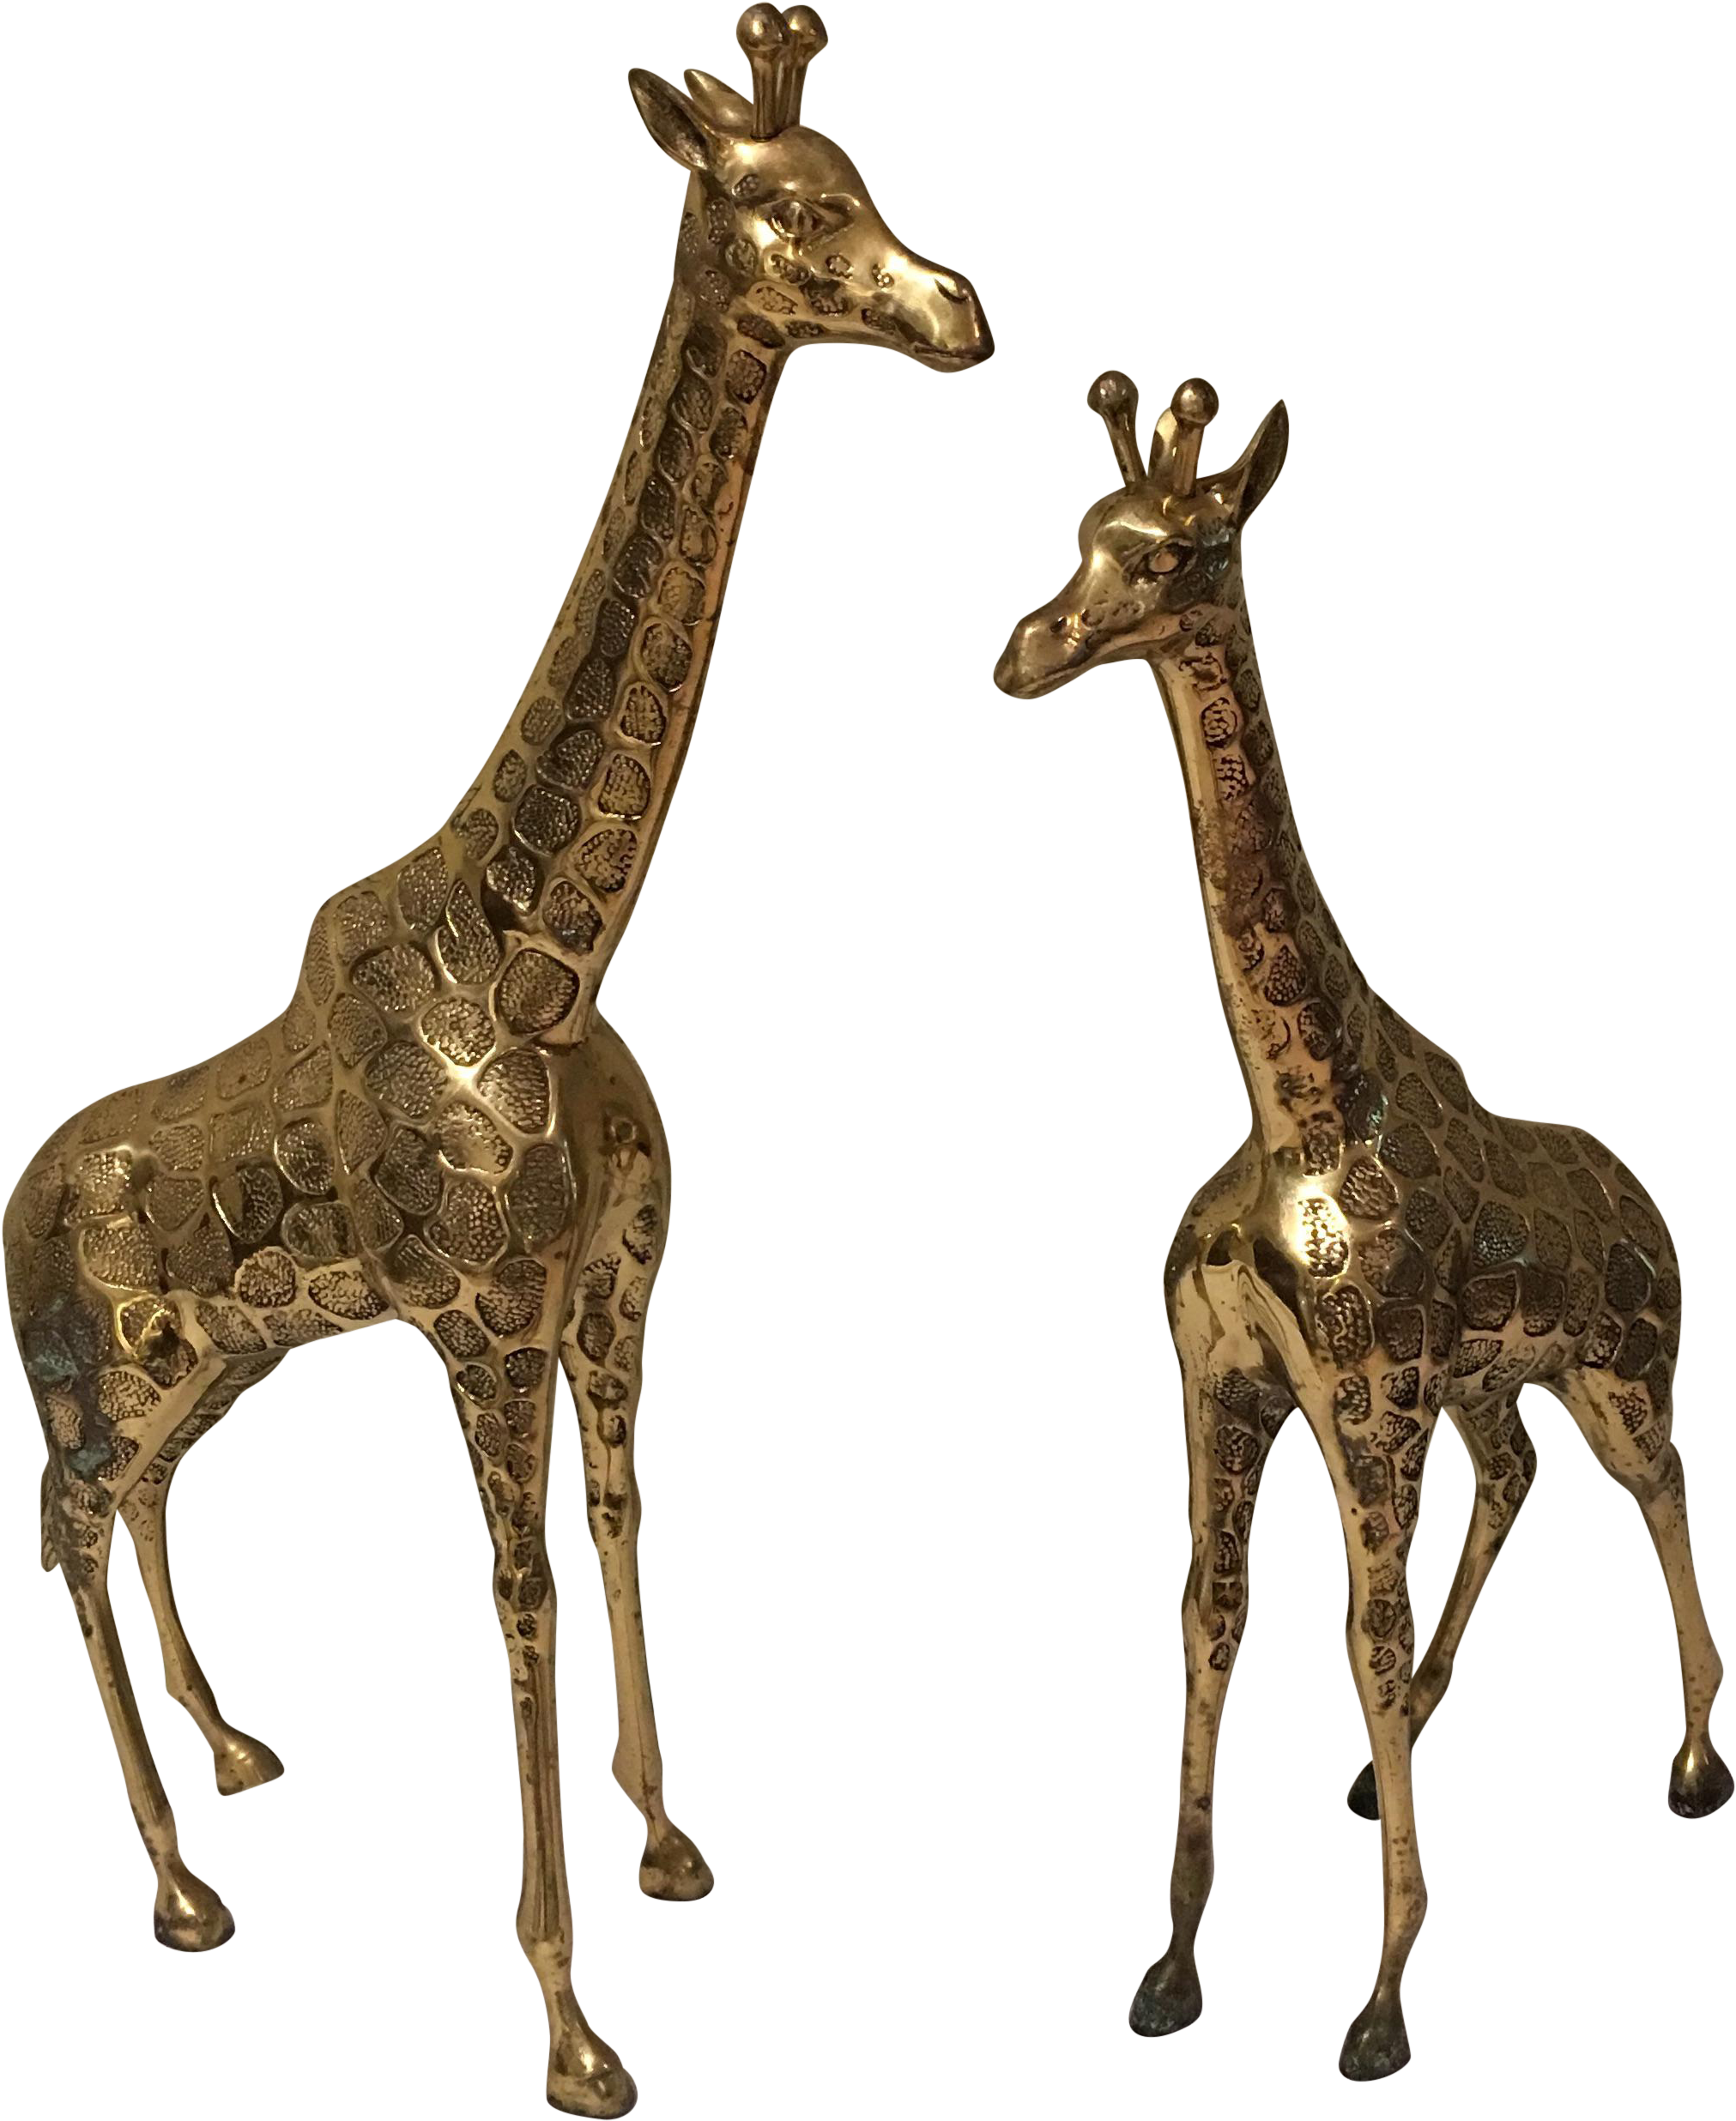 Giraffe (2247x2746)